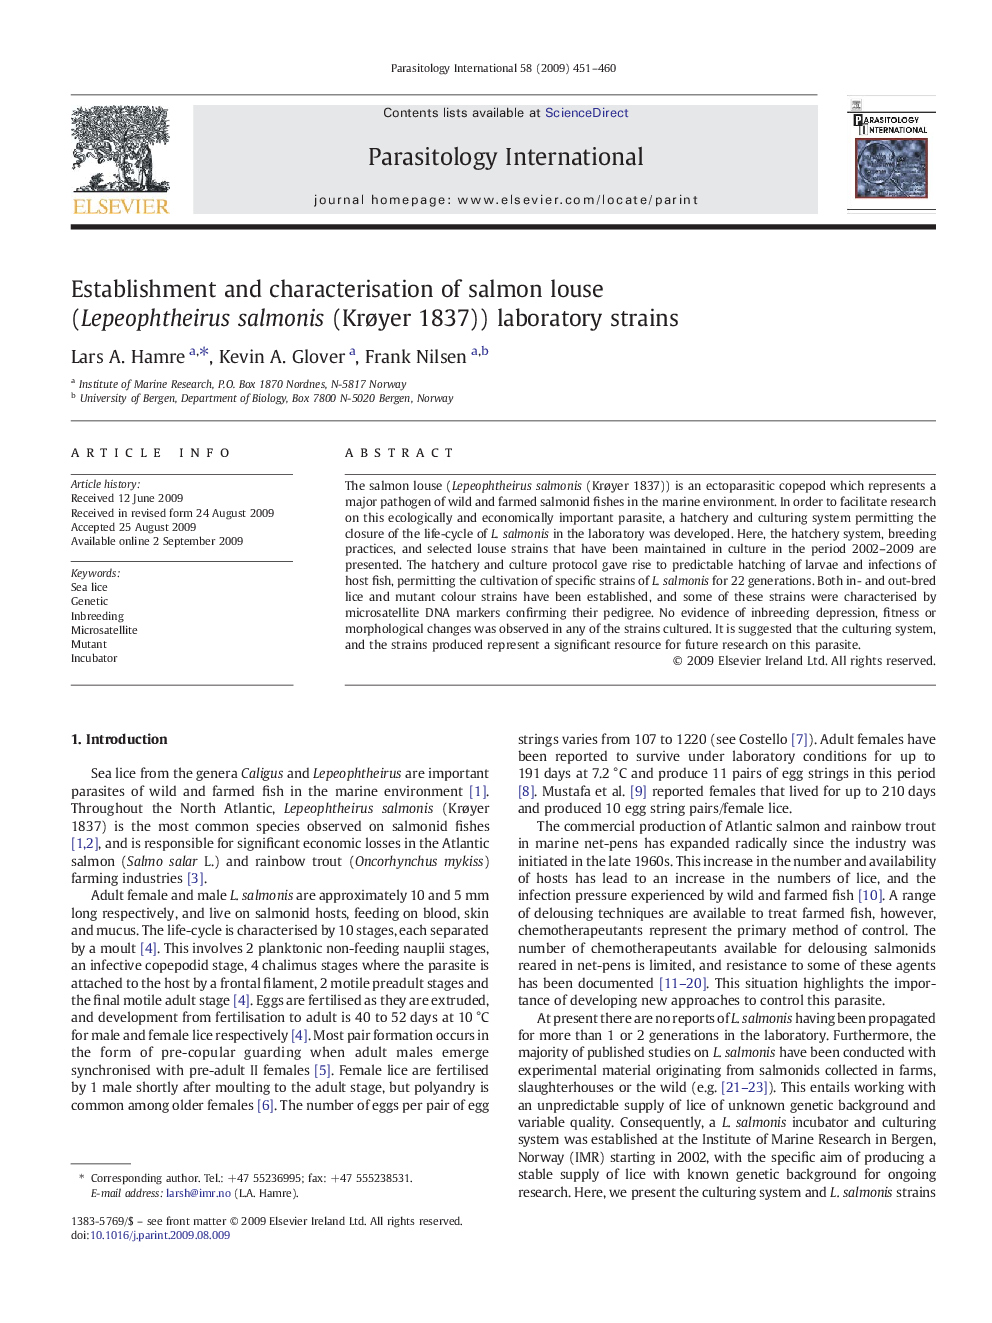 Establishment and characterisation of salmon louse (Lepeophtheirus salmonis (KrÃ¸yer 1837)) laboratory strains